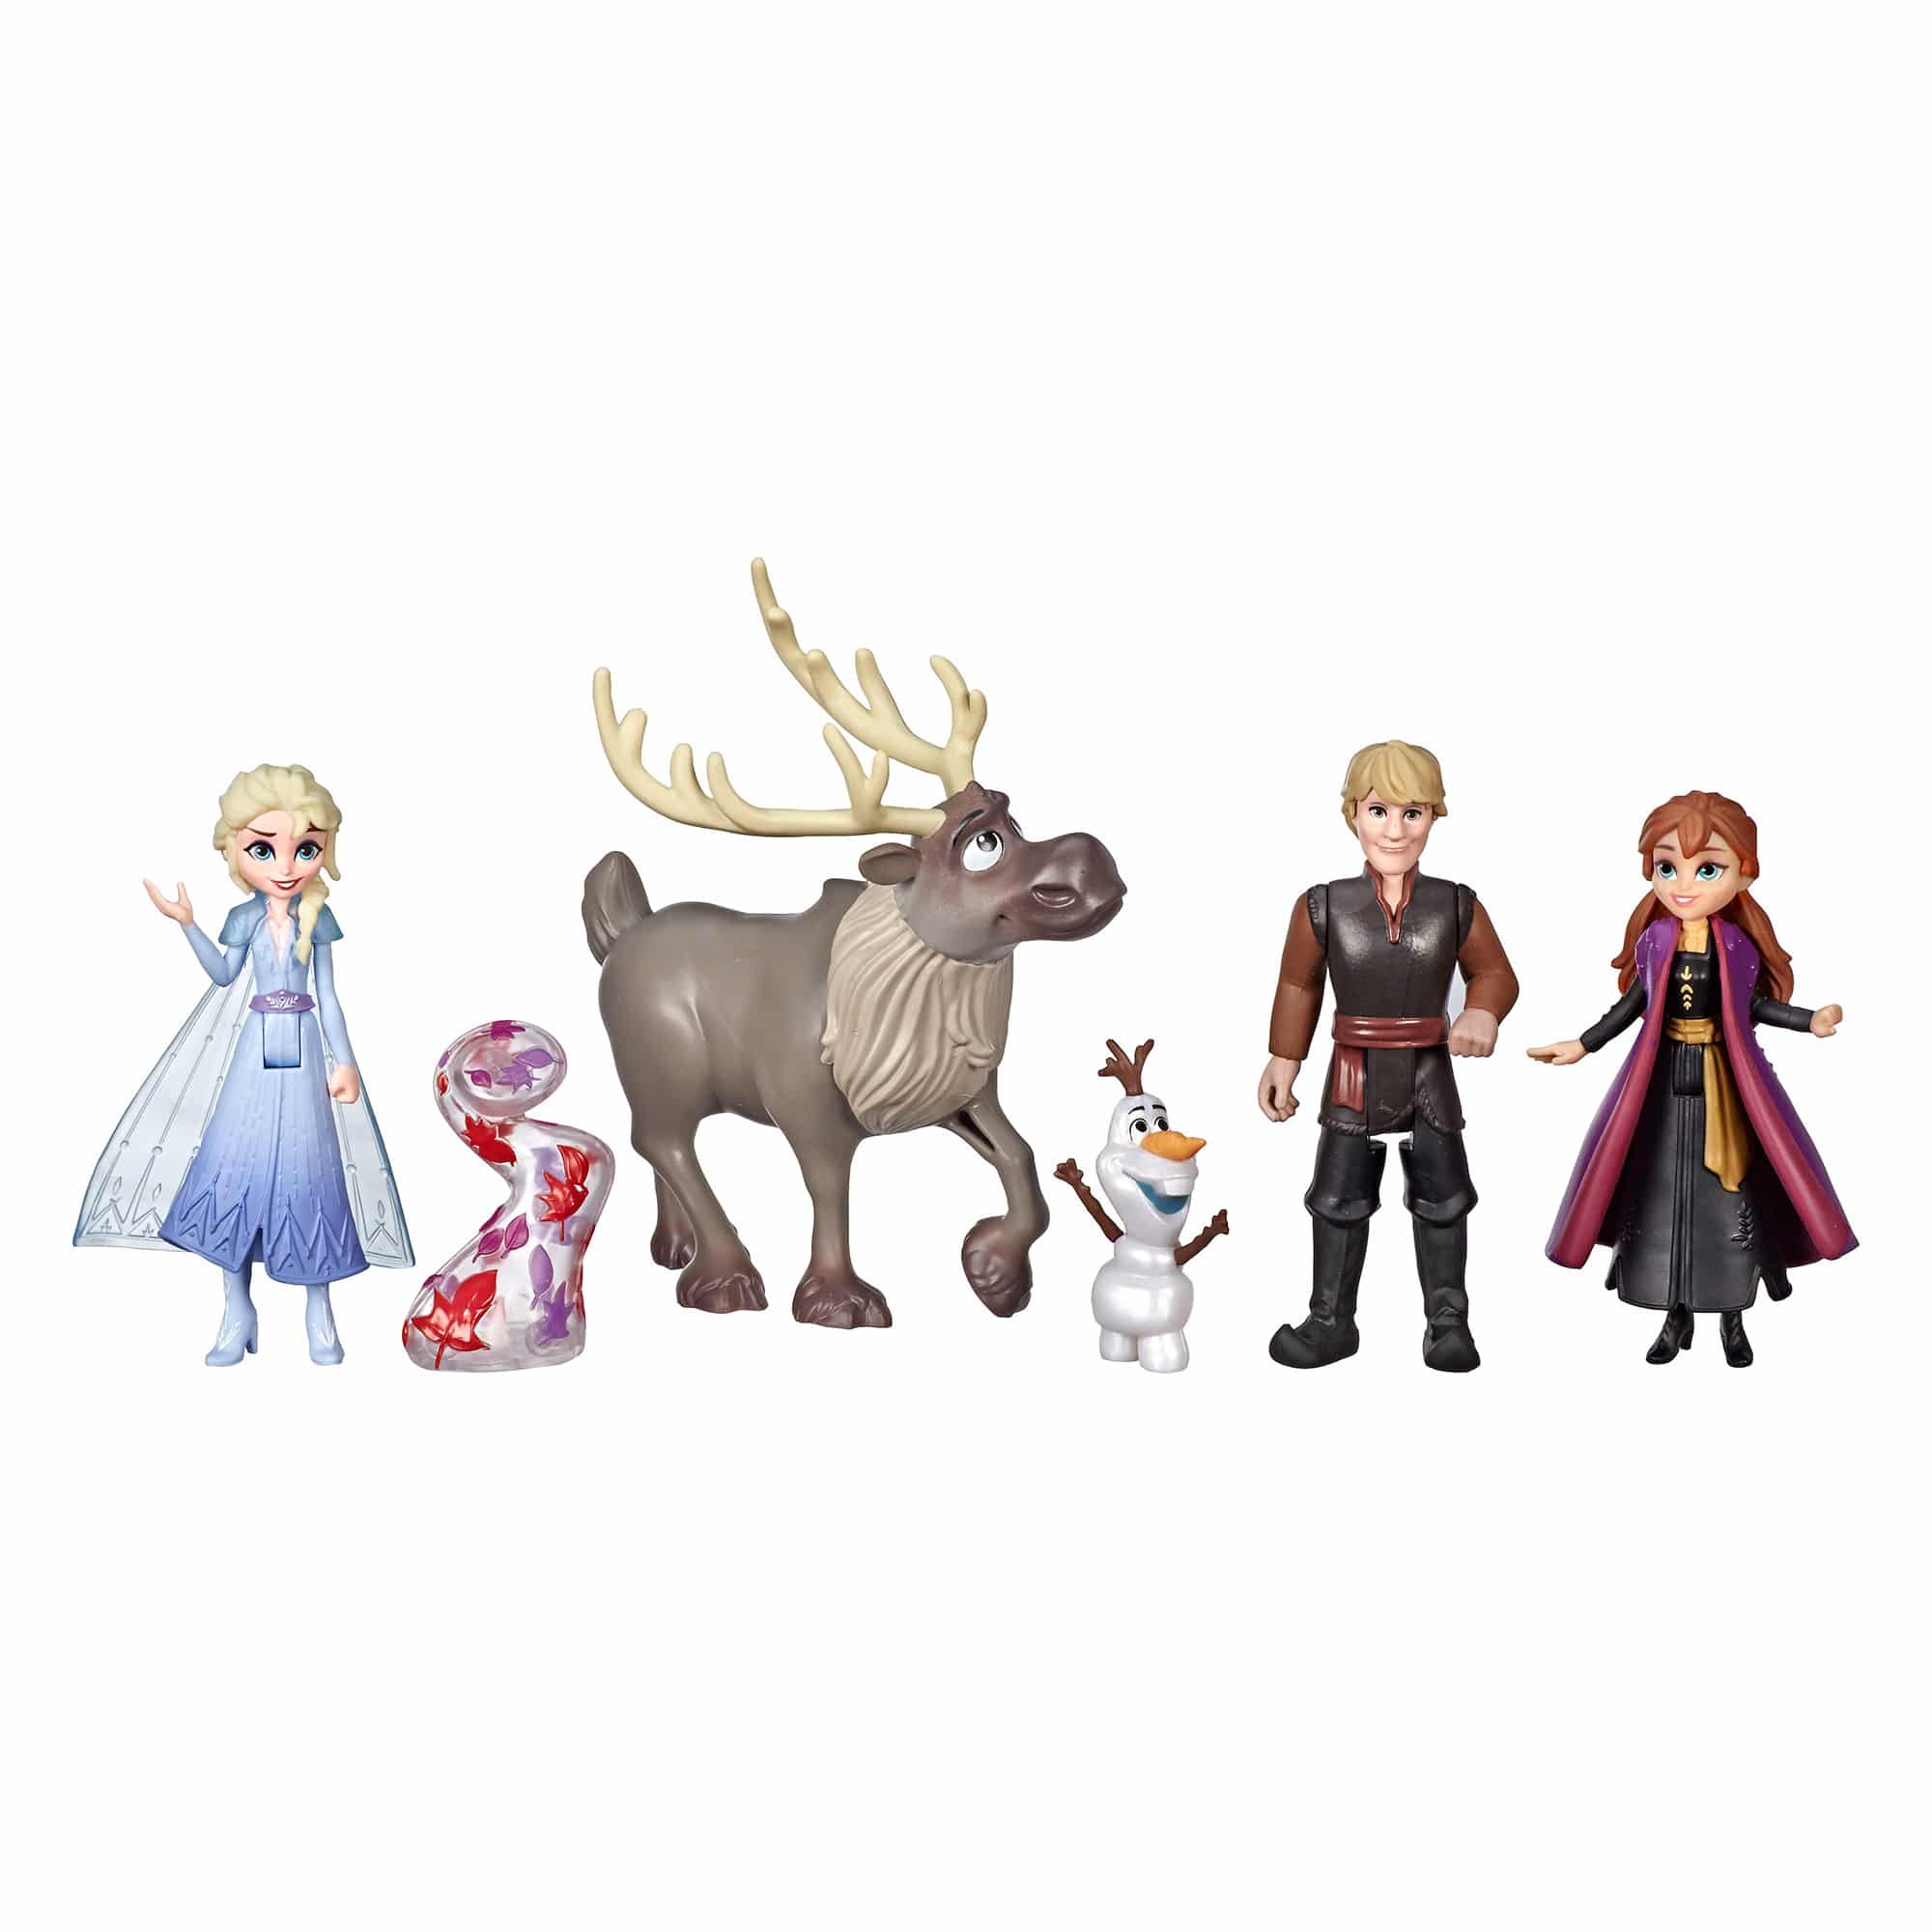 Disney Frozen 2 - Frozen Adventure Collection